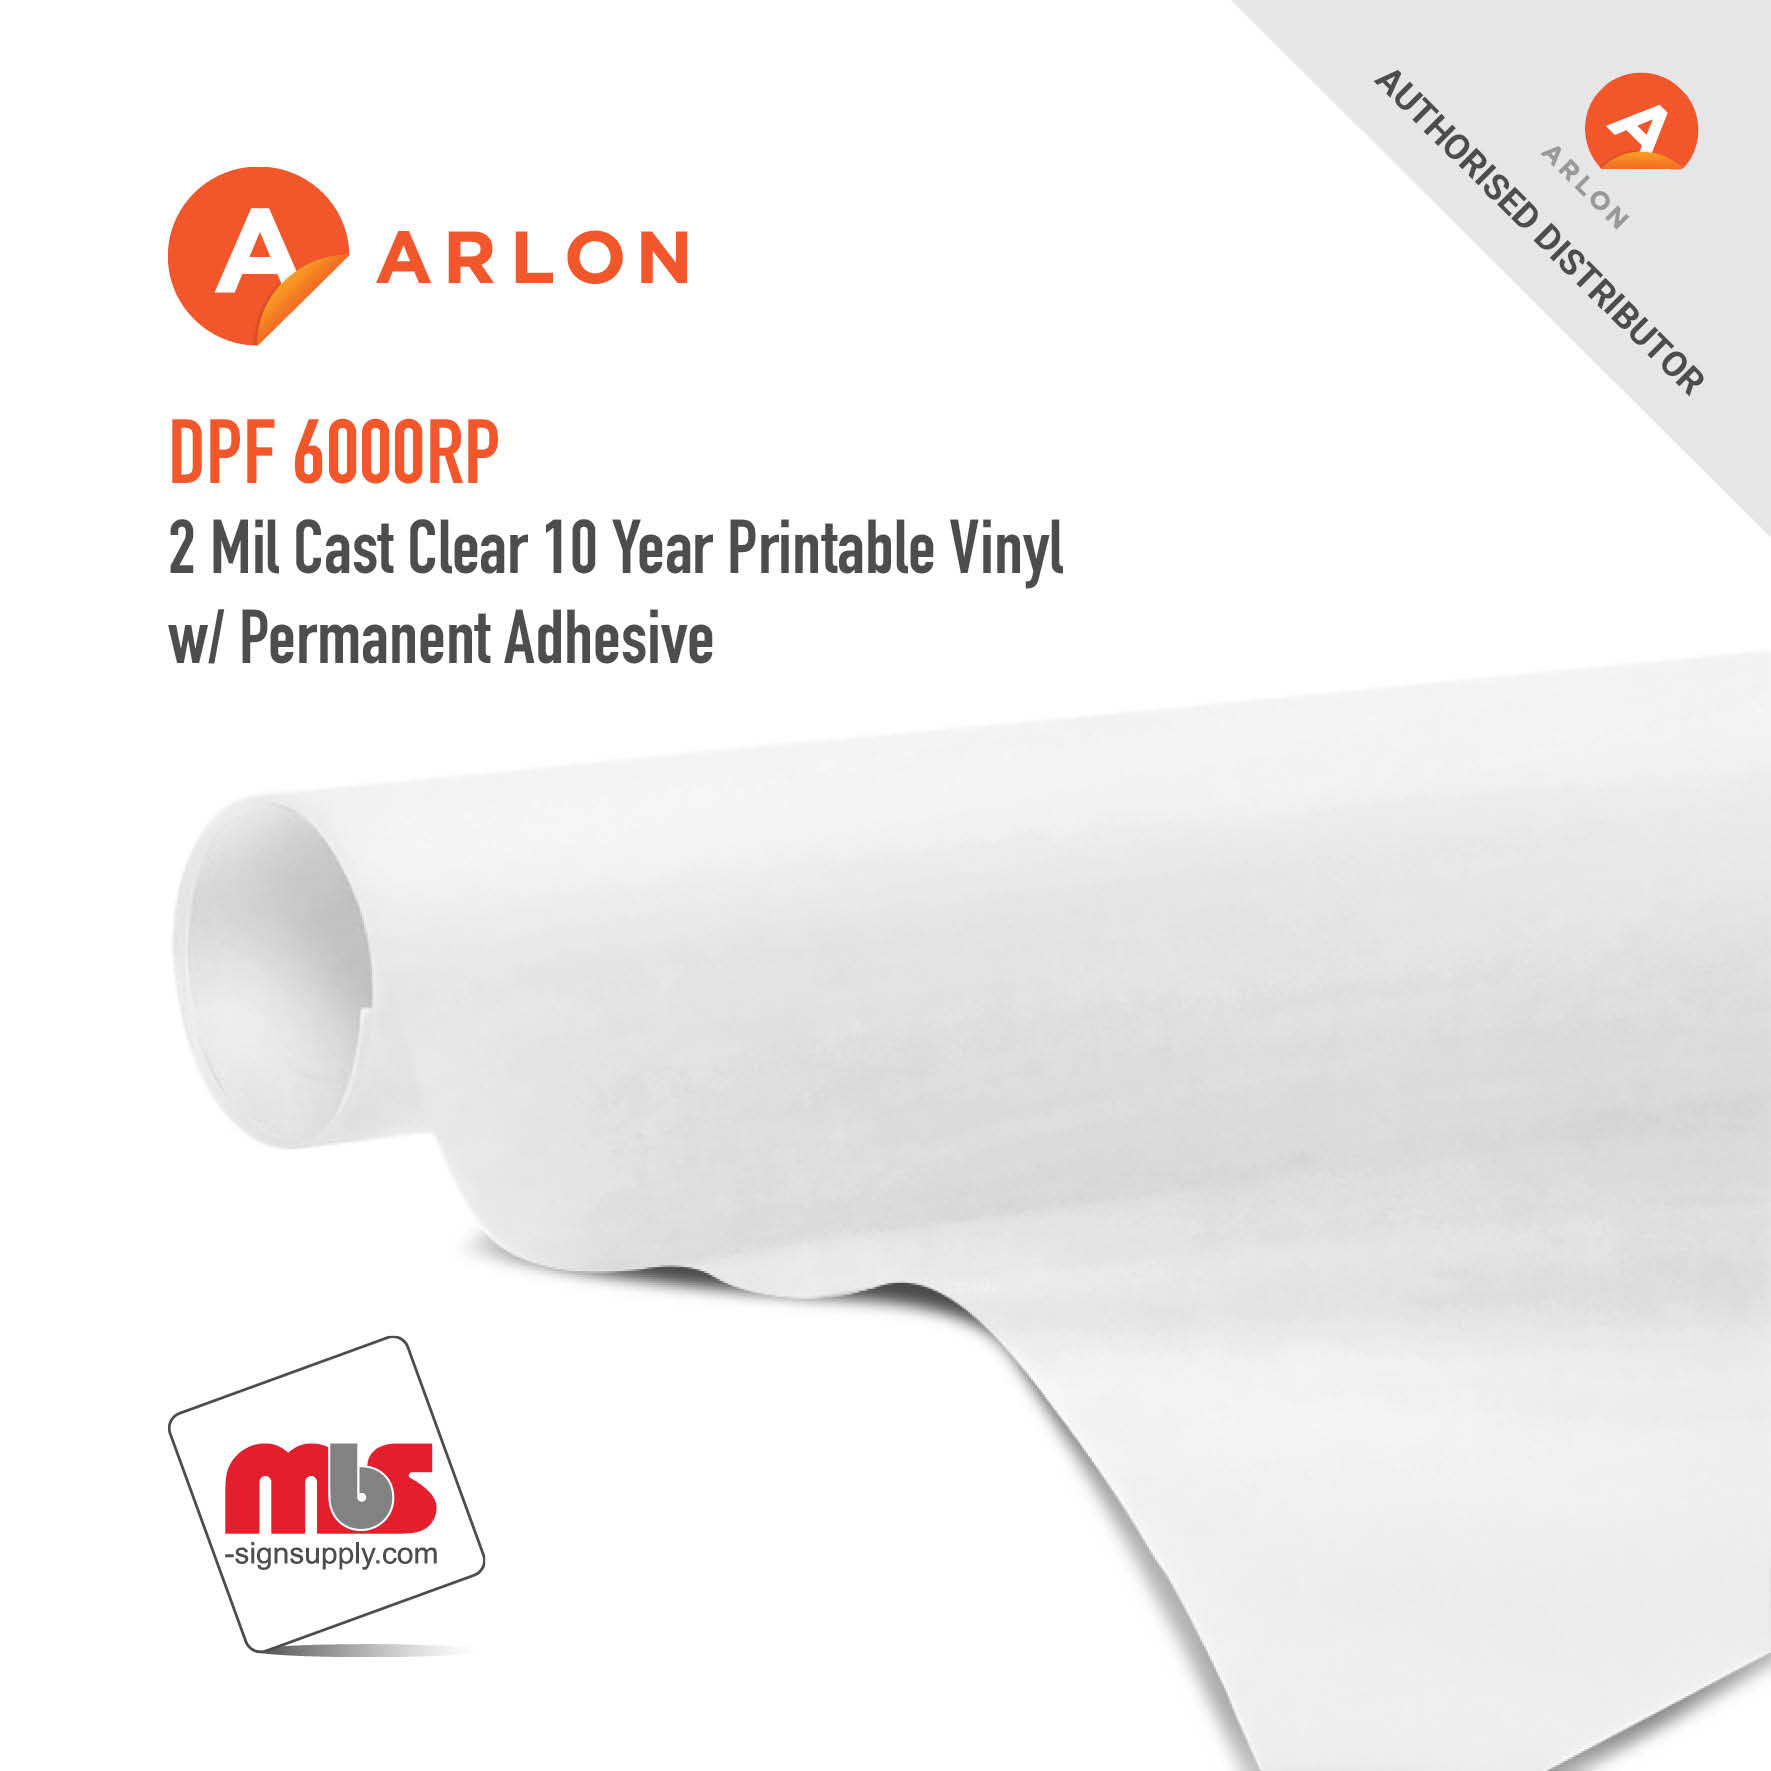 54'' x 25 Yard Roll - Arlon DPF 6000RP 2 Mil Cast Clear 10 Year Printable Vinyl w/ Permanent Adhesive